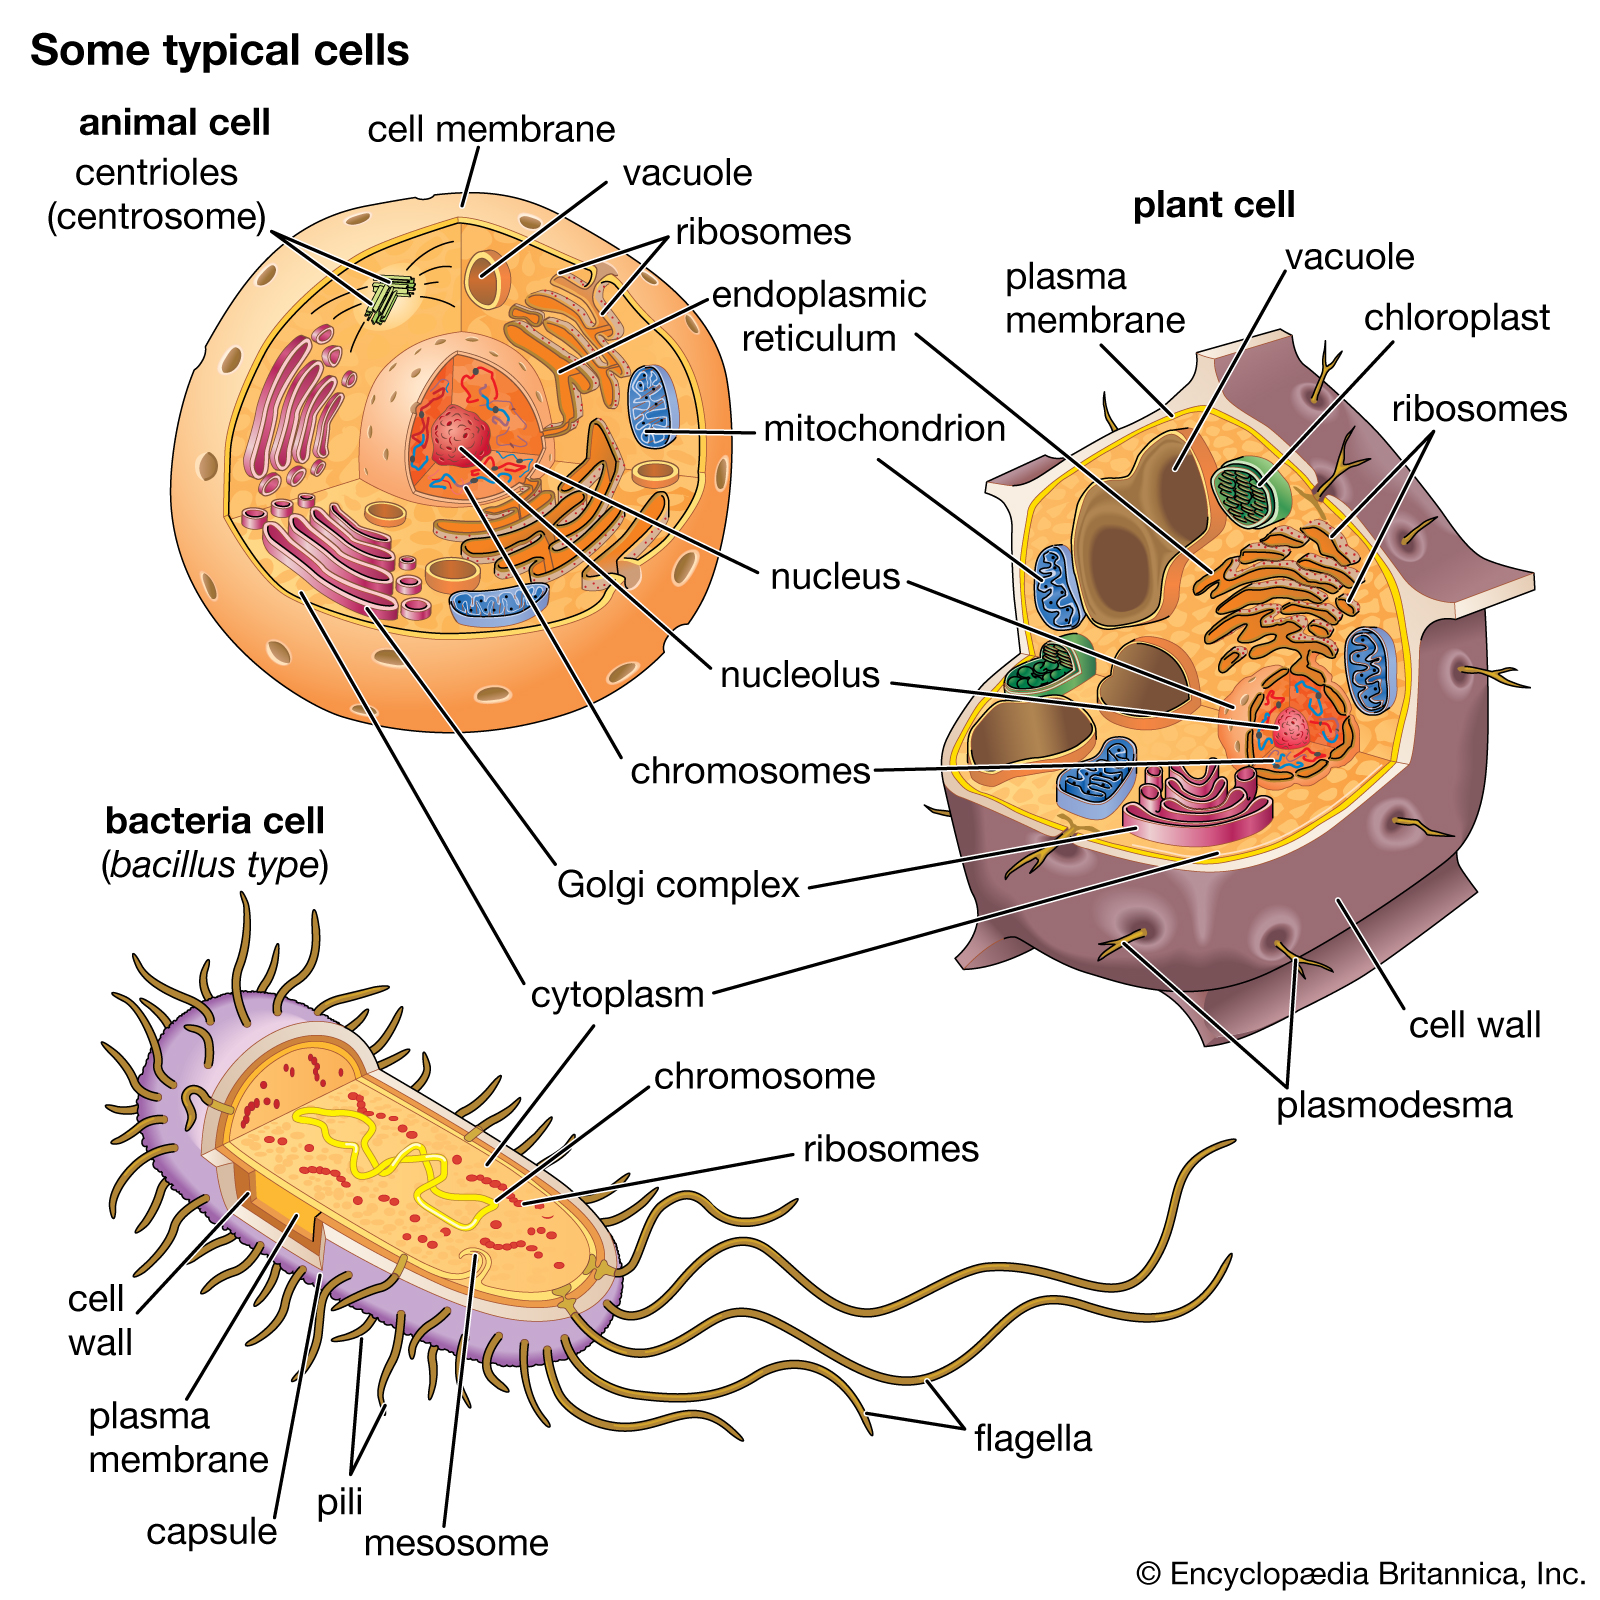 Prokaryotic vs Eukaryotic Cell